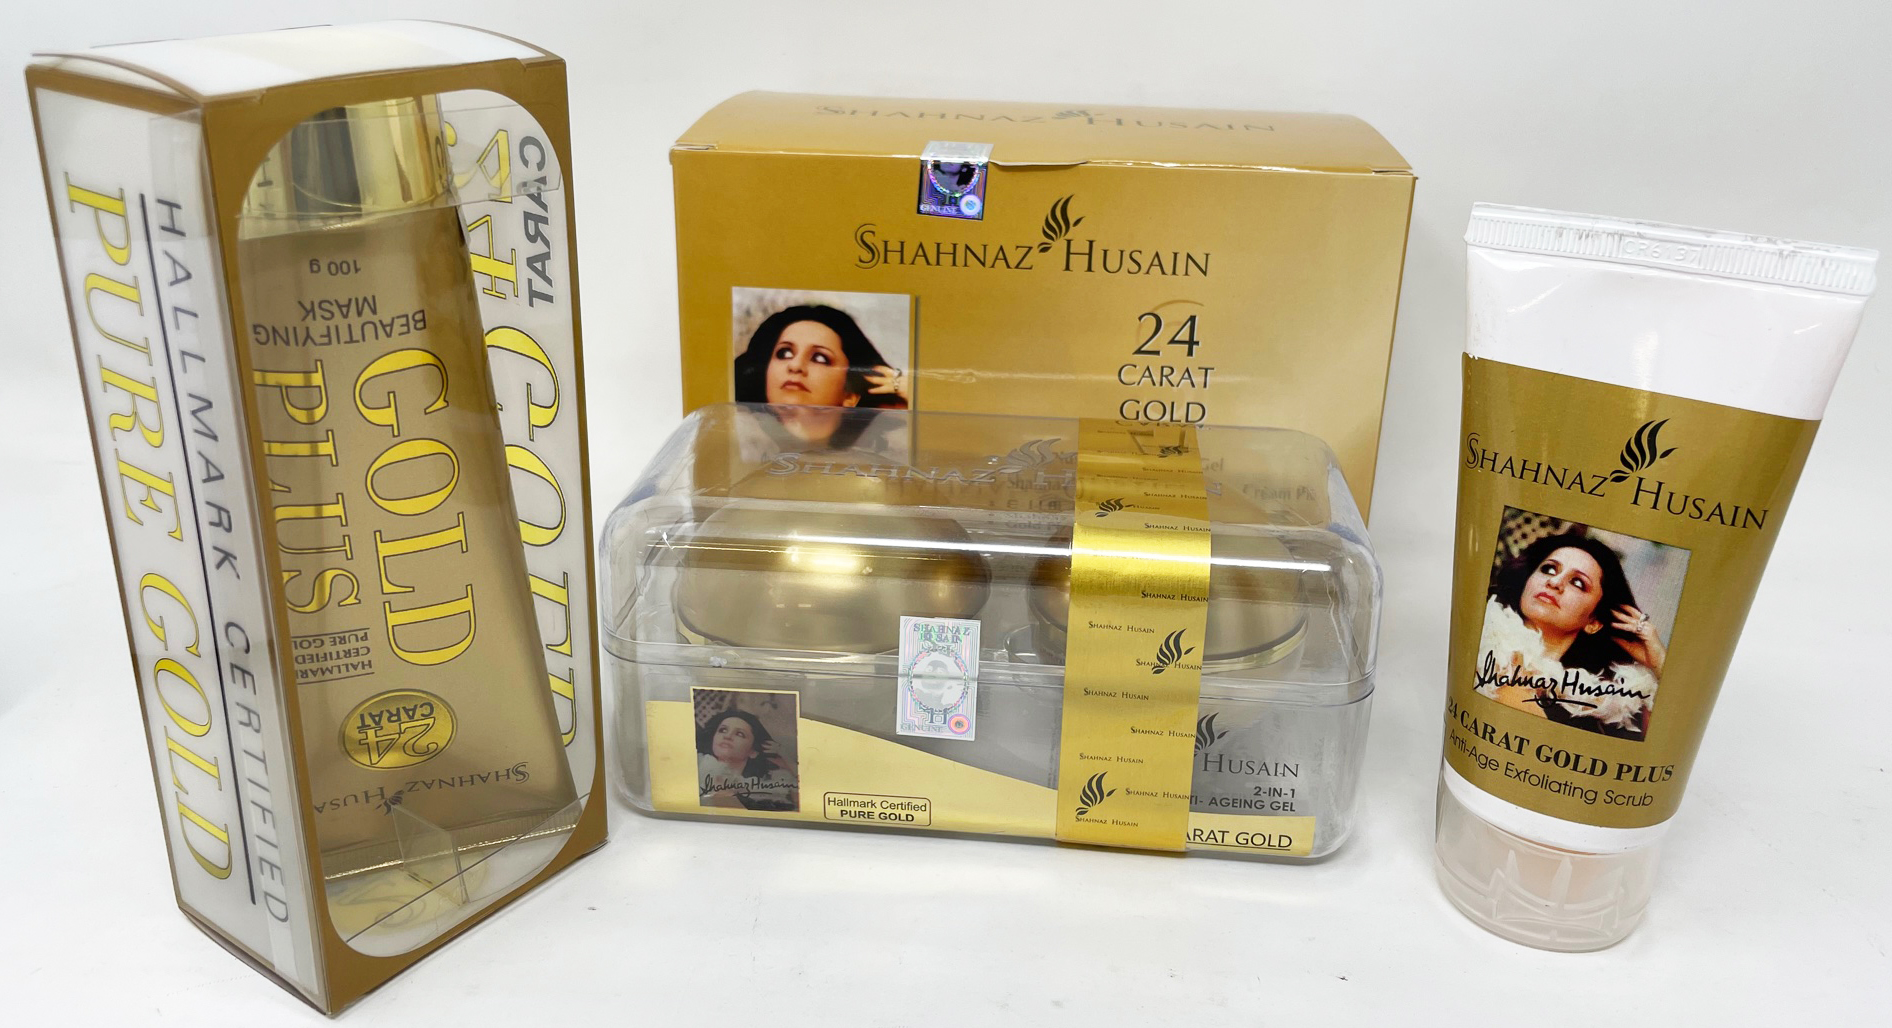 Home use Shahnaz Husain Gold Facial Kit 3 Pack